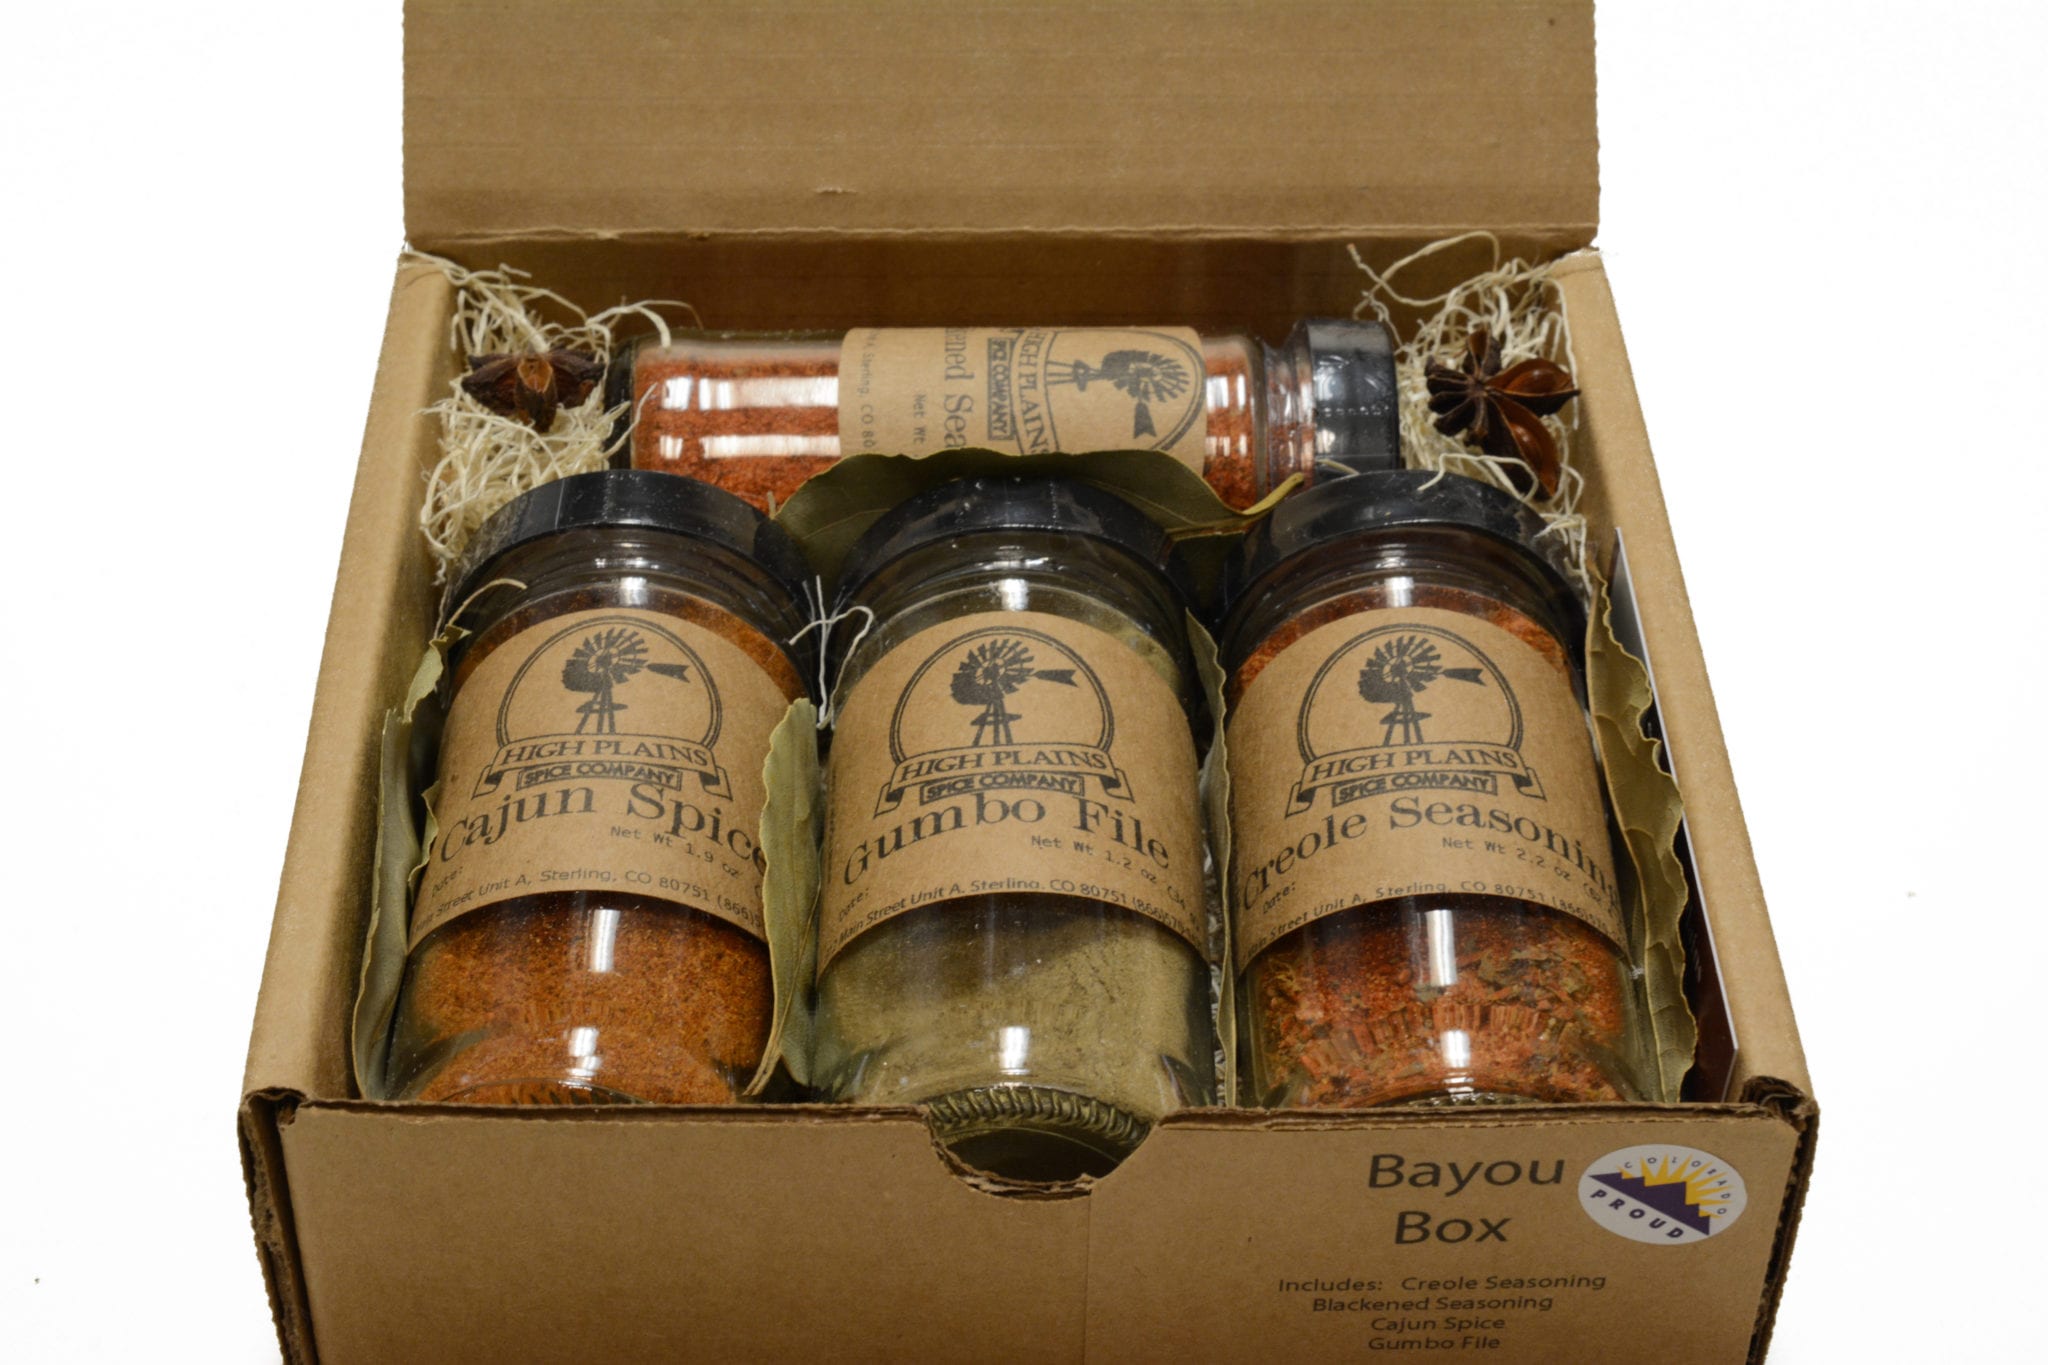 Corporate Gifts: Cajun Spice 3 Jar Box